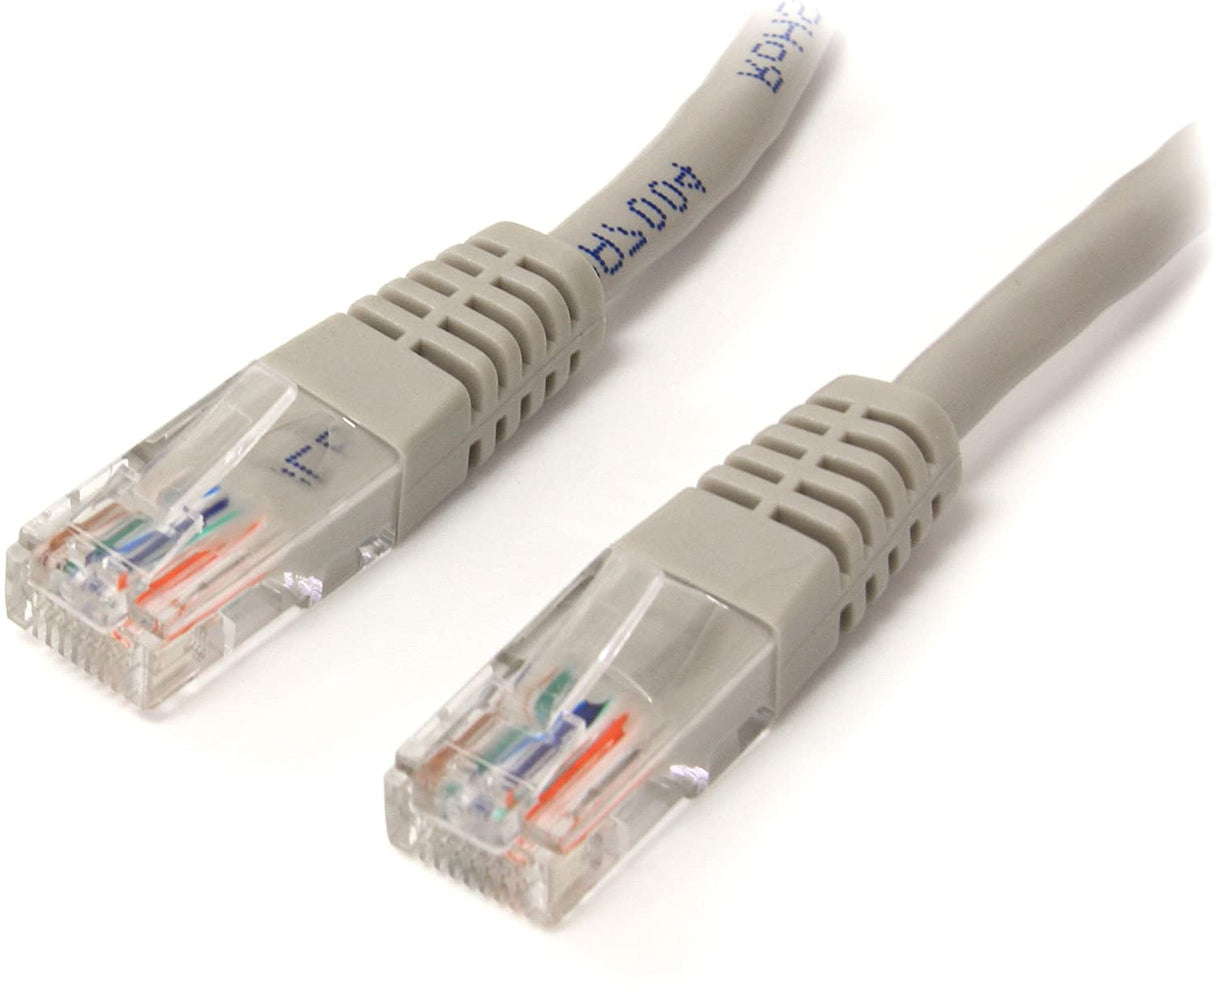 StarTech.com Cat5e Ethernet Cable - 20 ft - Gray - Patch Cable - Molded Cat5e Cable - Network Cable - Ethernet Cord - Cat 5e Cable - 20ft (M45PATCH20GR), Grey 20 ft / 6m Grey